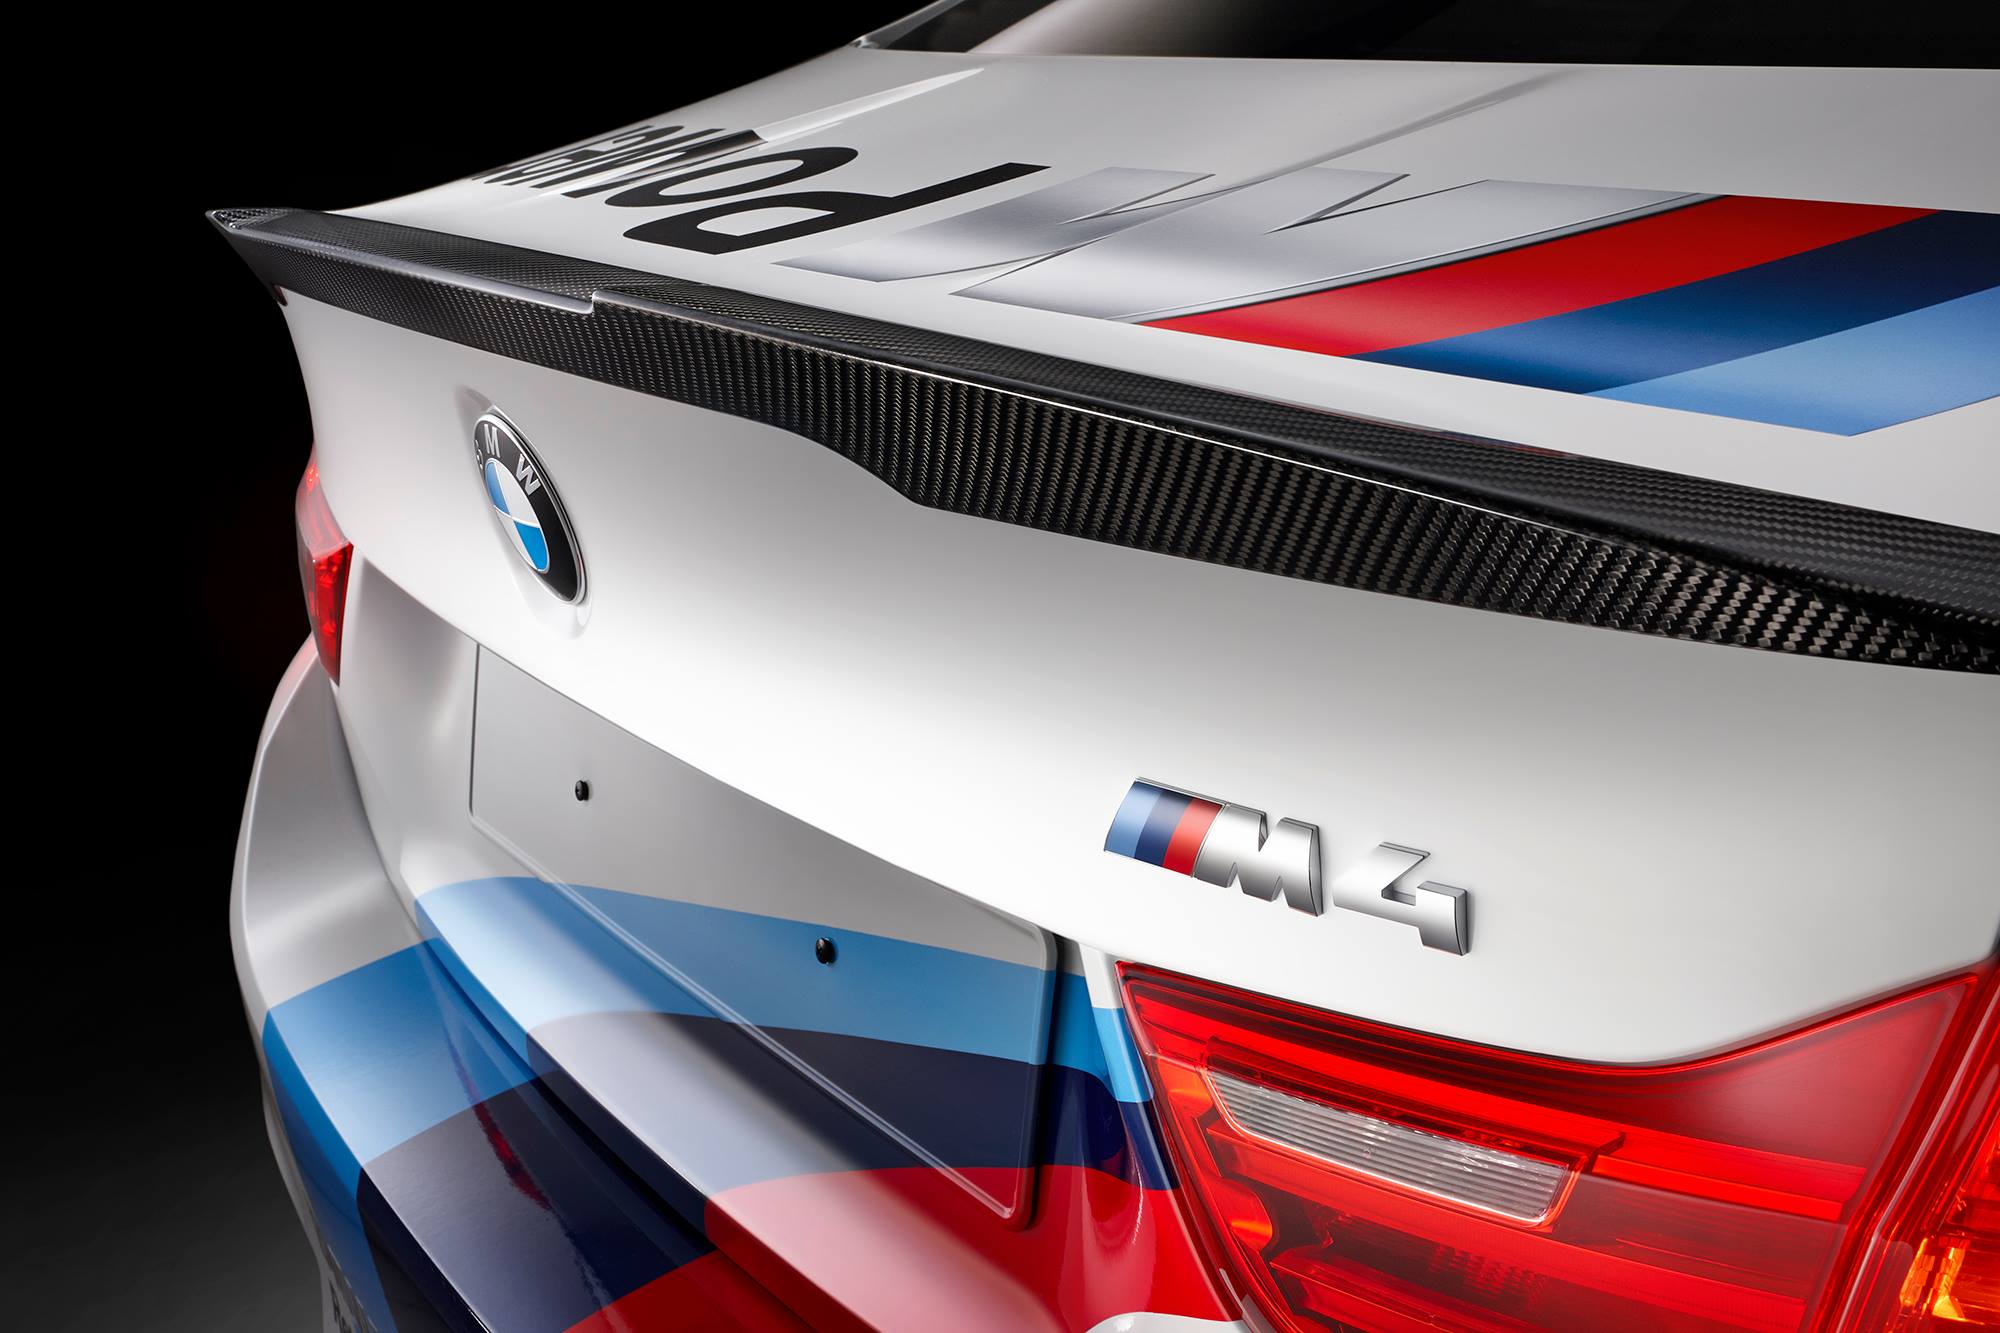 2014 BMW M4 Coupe MotoGP Safety Car